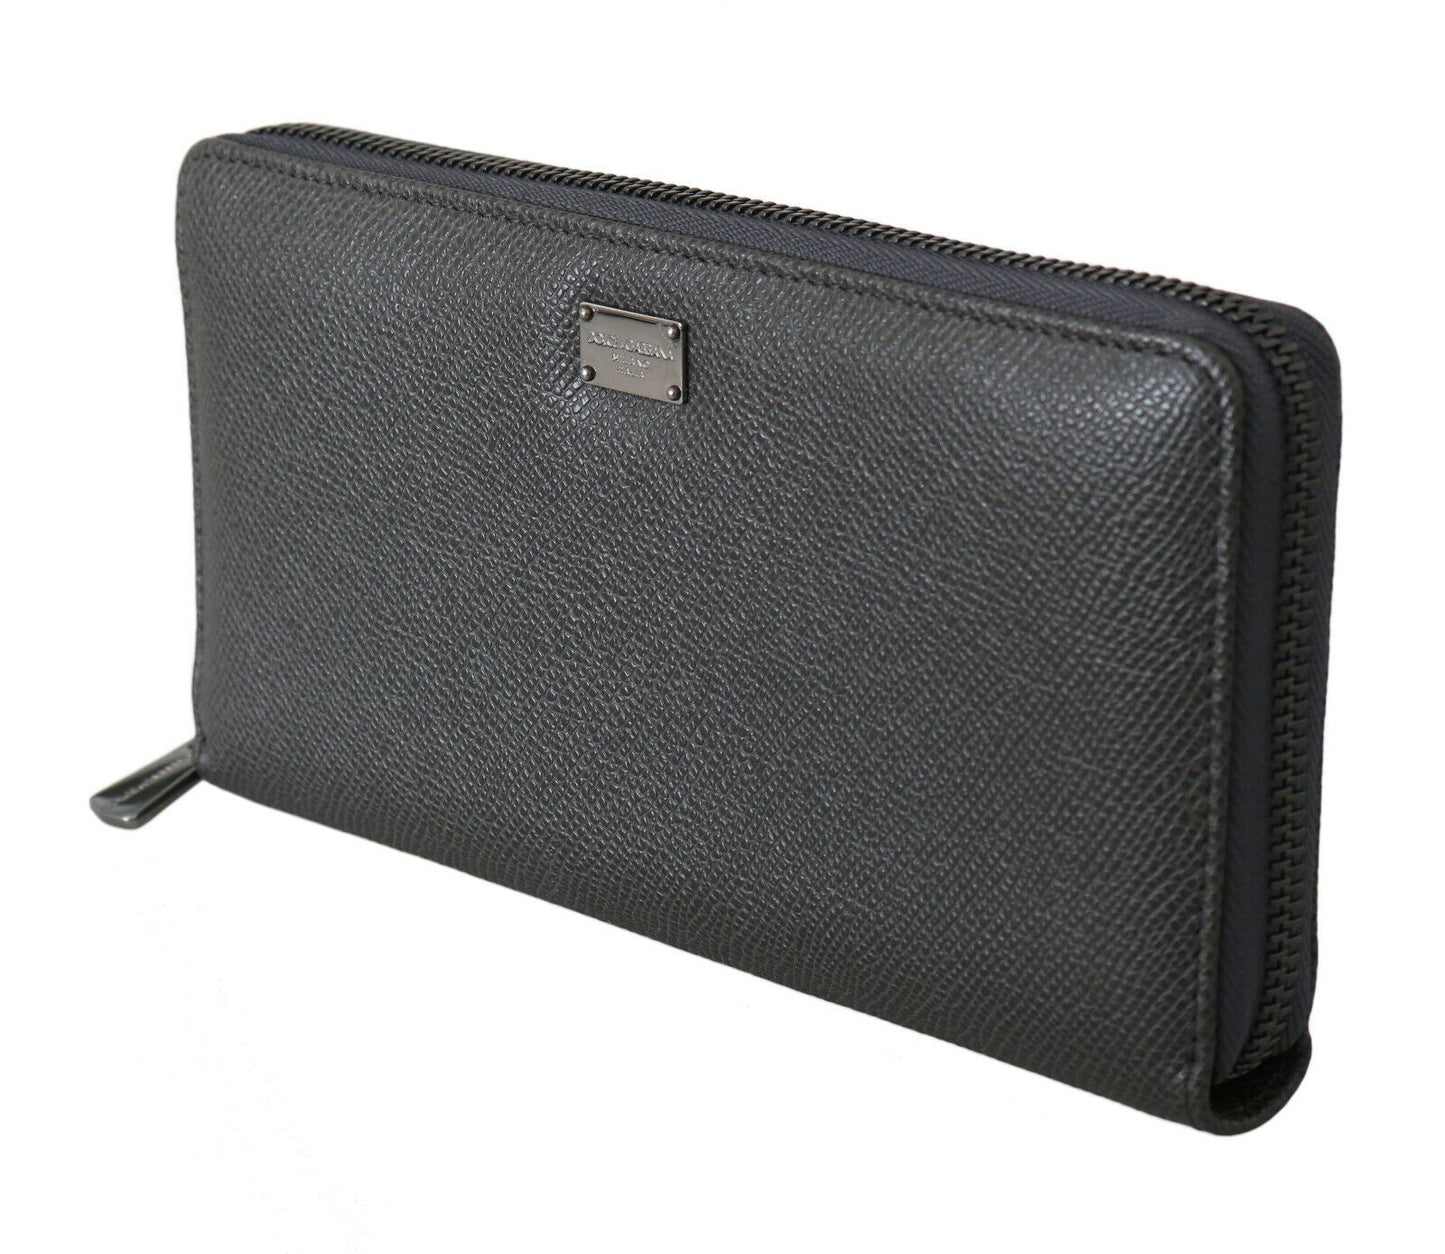 Dolce & Gabbana Elegant Continental Leather Wallet